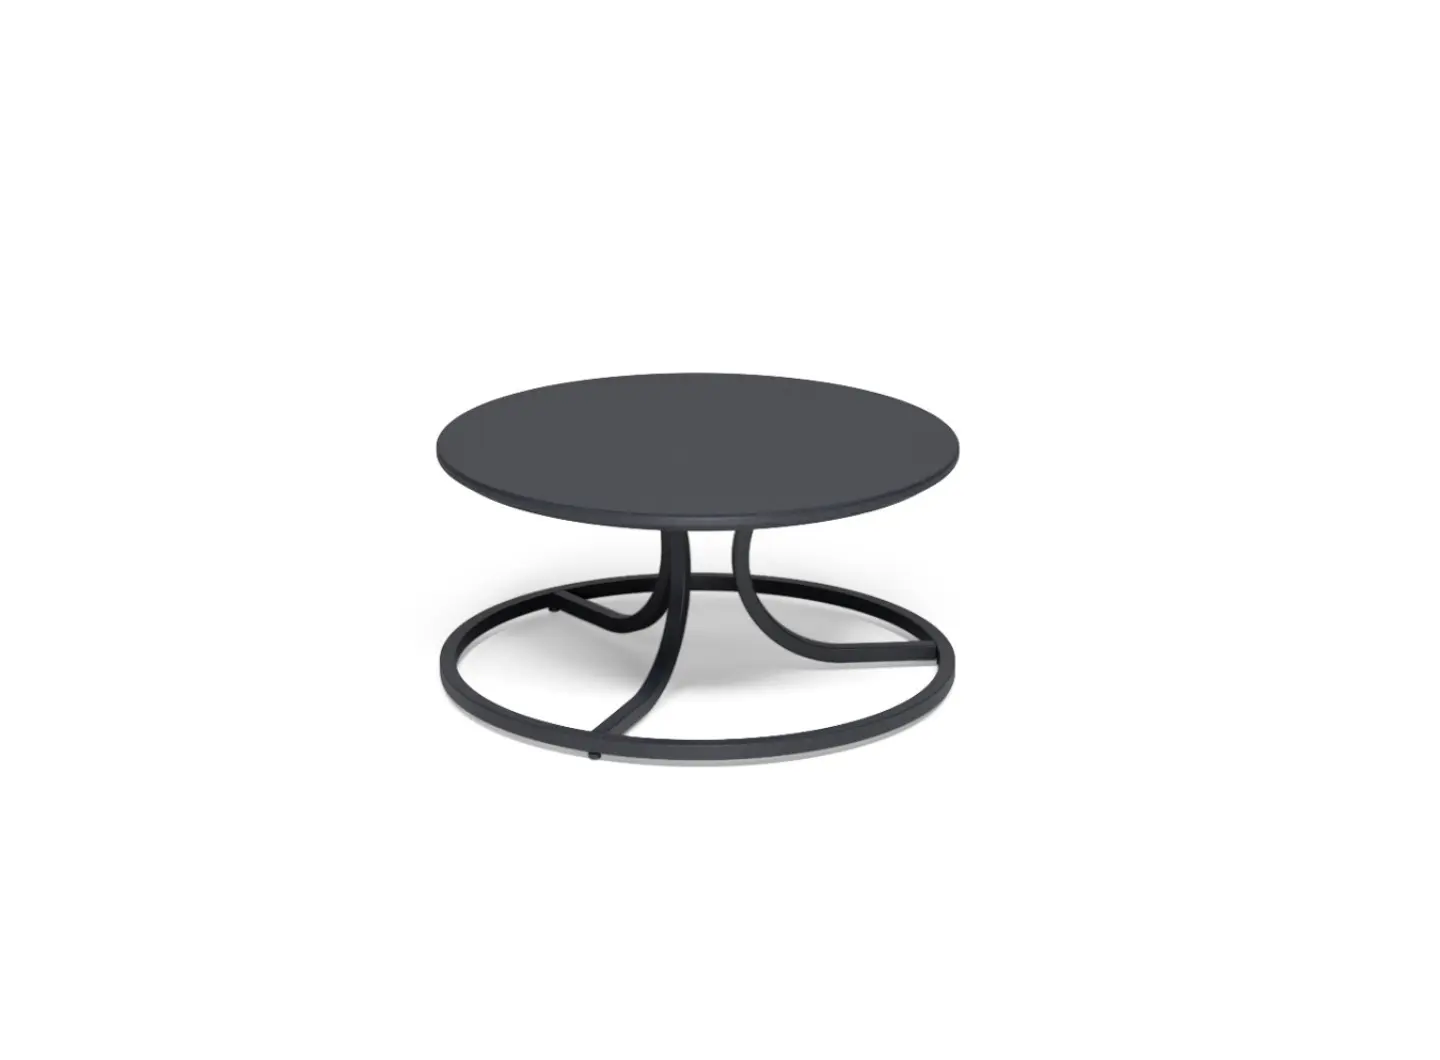 EMU | Collier Coffee Table